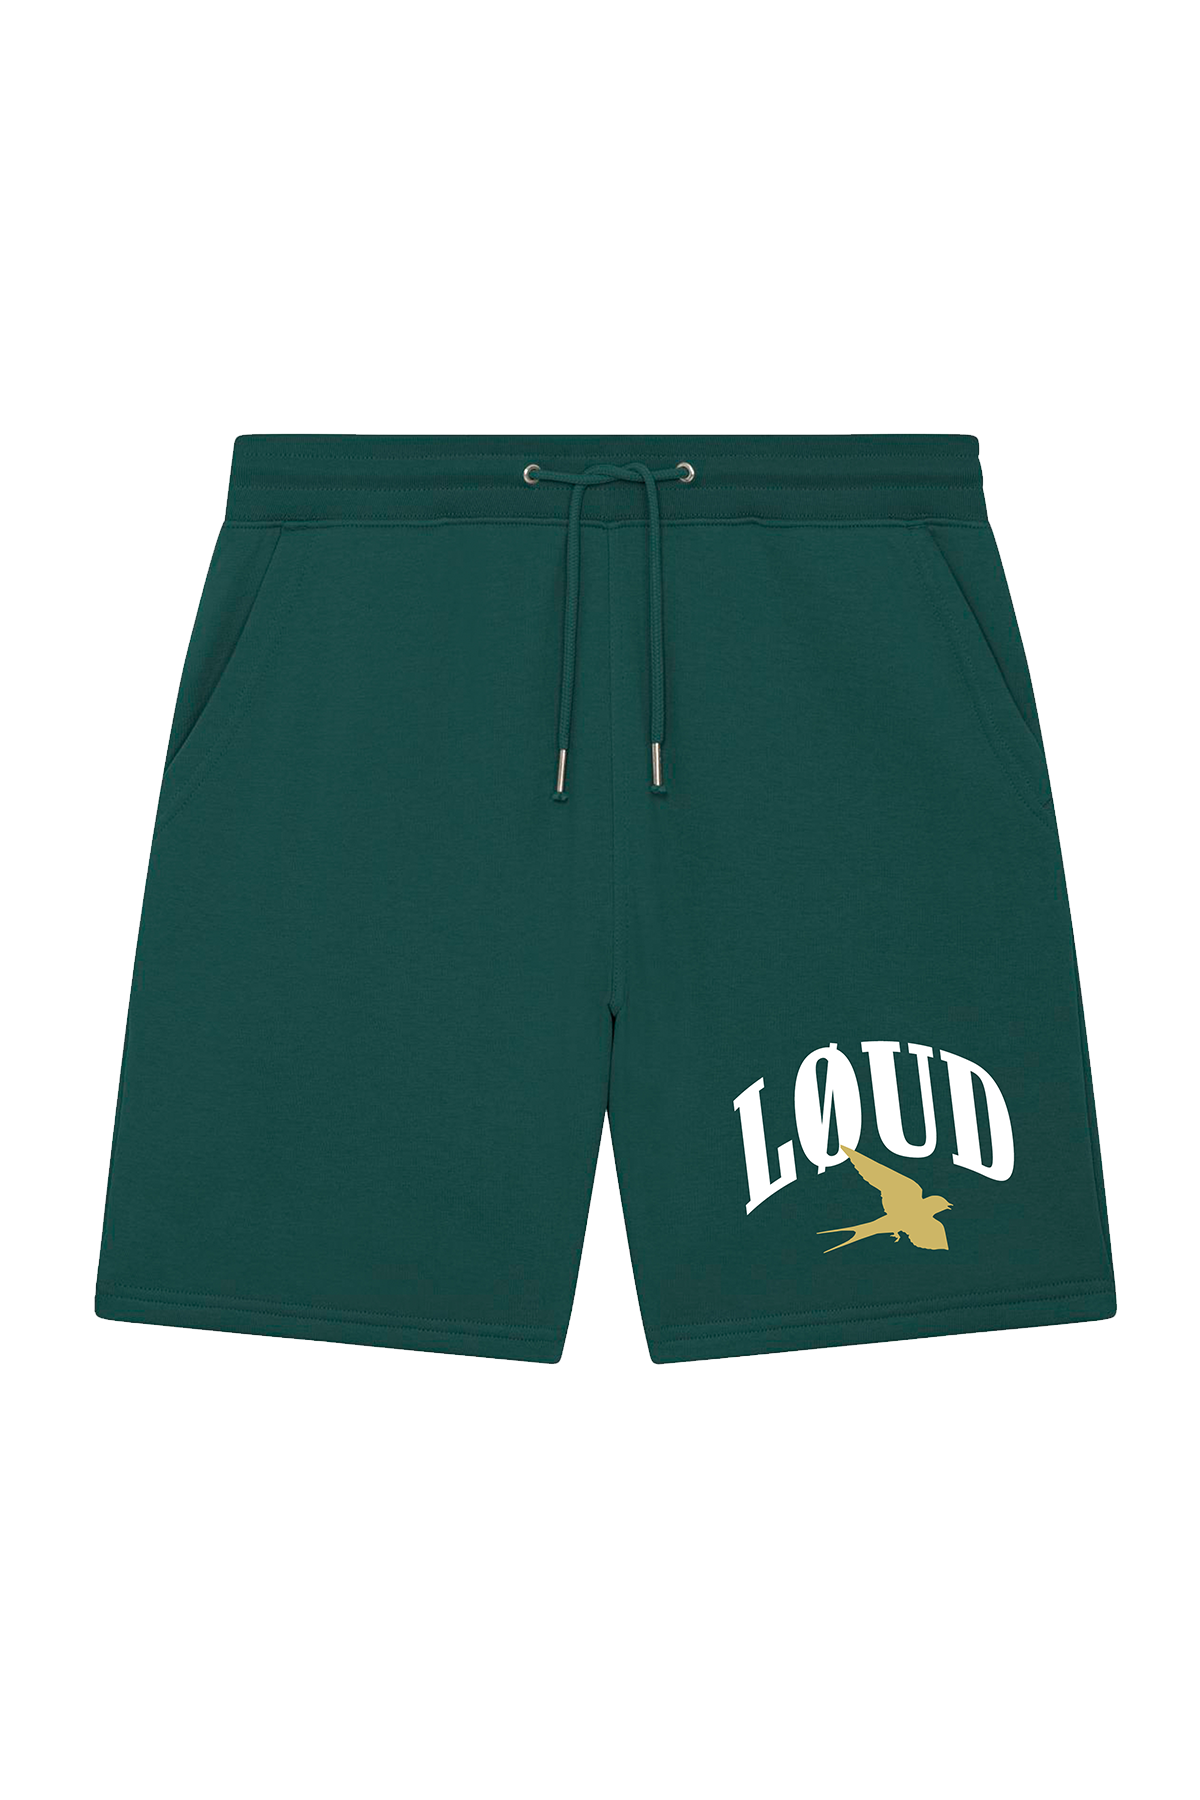 Loud Green Fly High Shorts